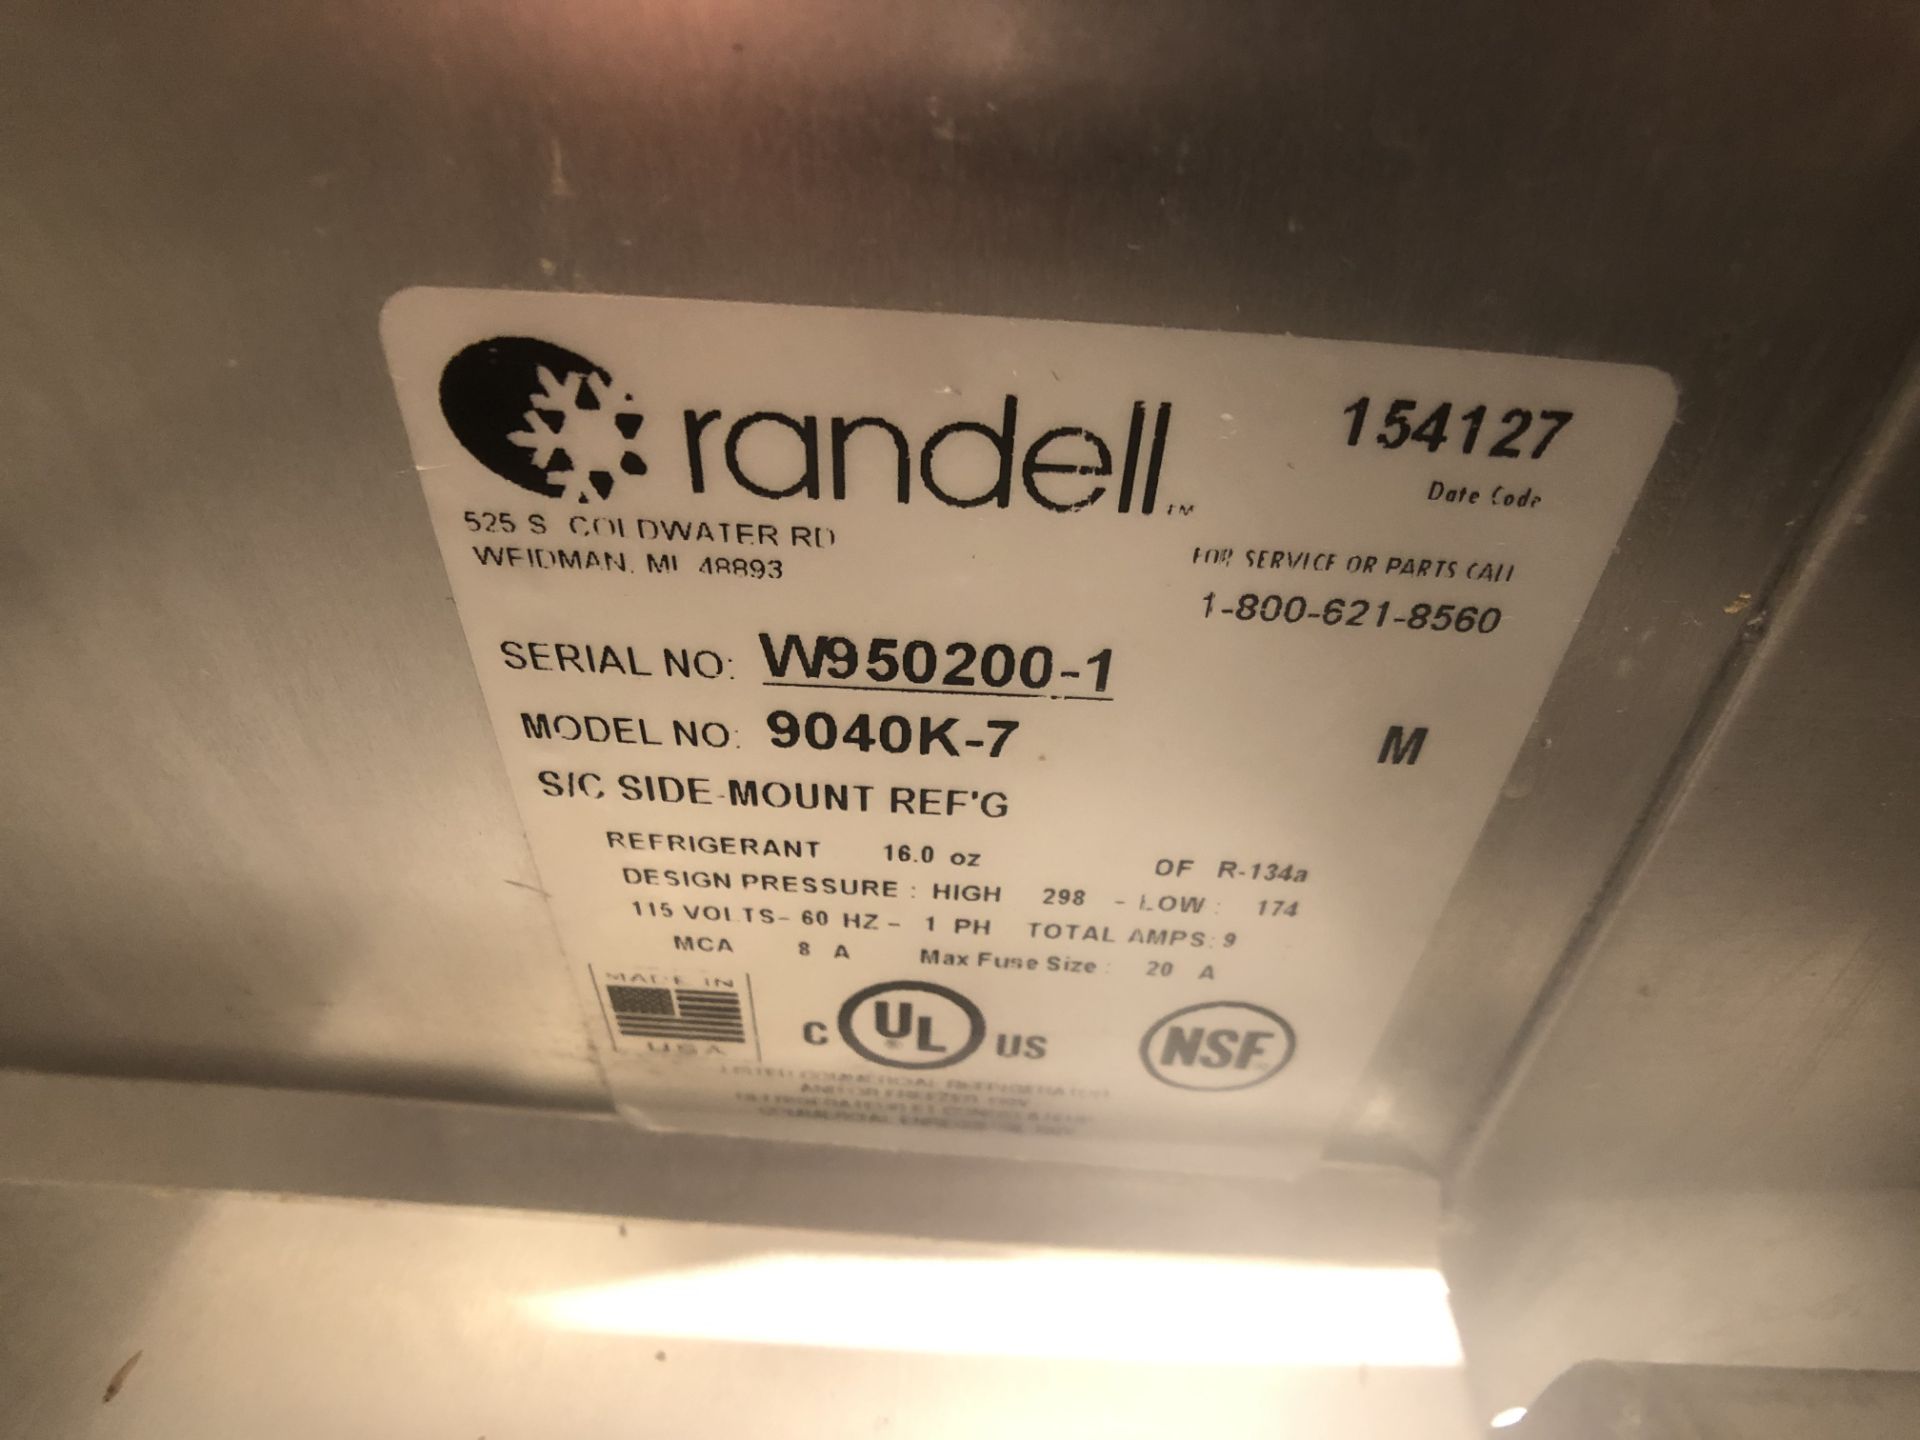 Randell 60" Refrigerator / Sandwich Prep Table, Model 9040K-7, S/N W950200-1, (2) Sections, 60" W - Image 4 of 4